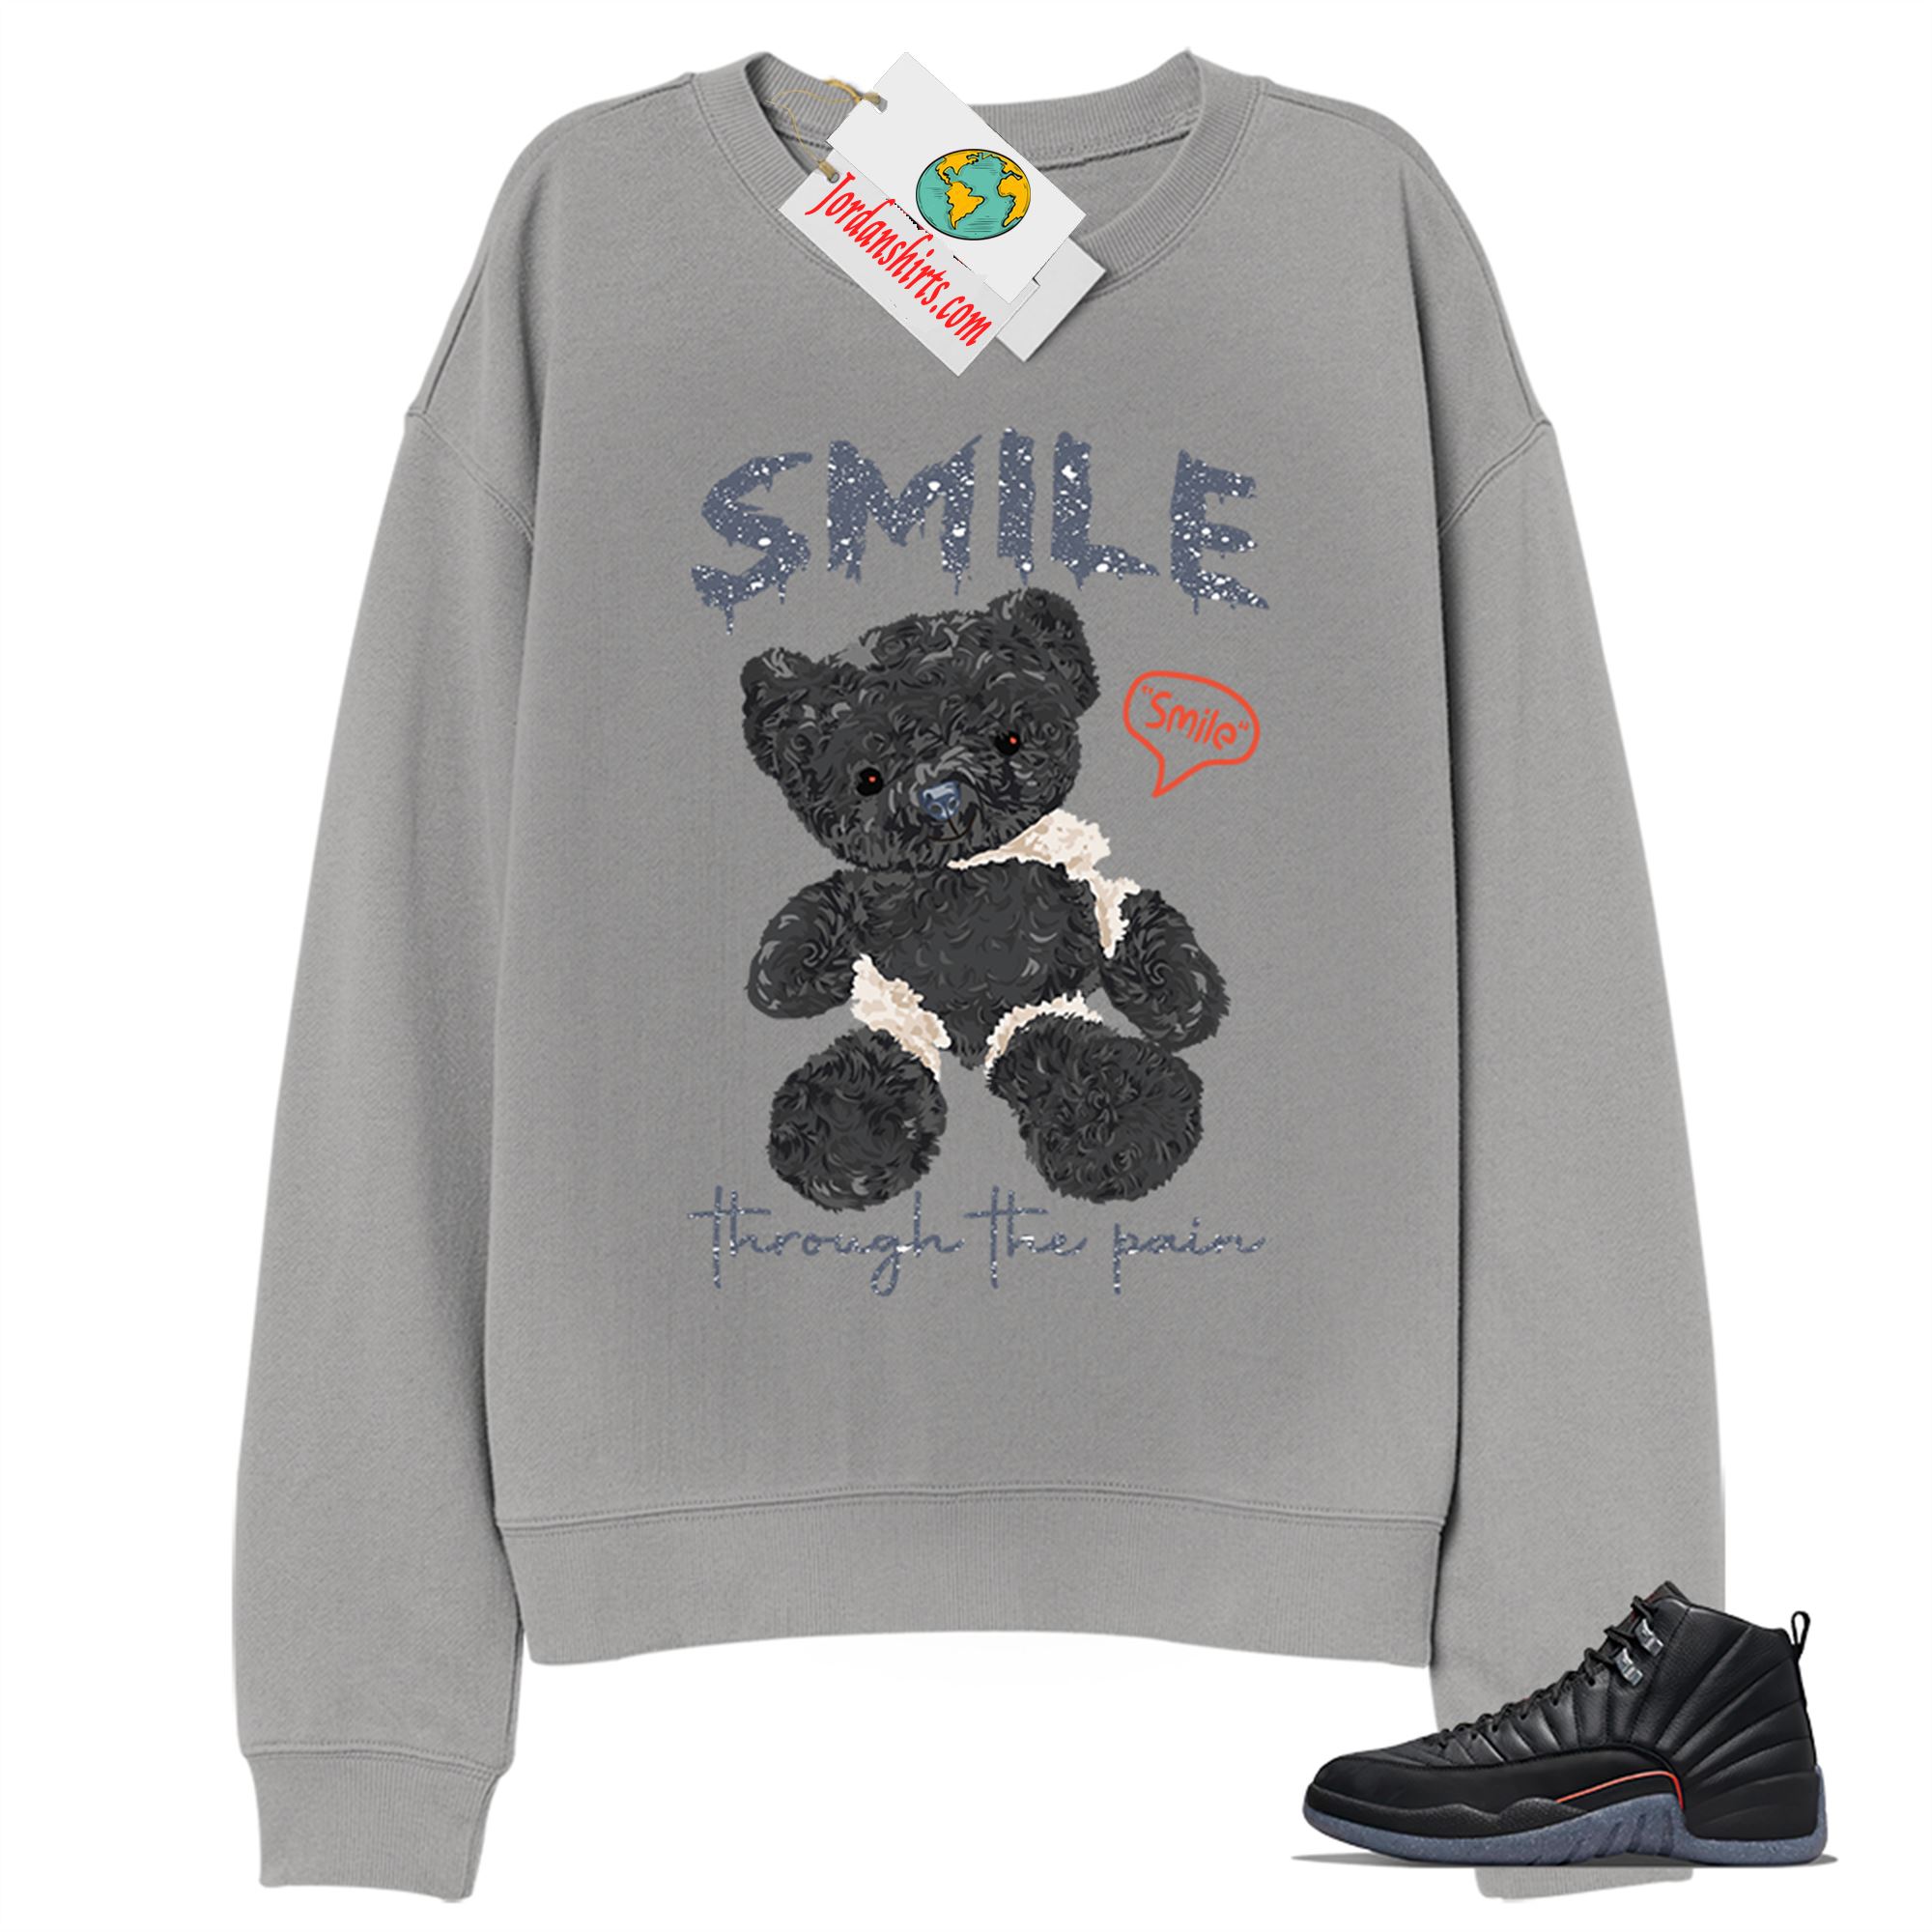 Jordan 12 Sweatshirt, Teddy Bear Smile Pain Grey Sweatshirt Air Jordan 12 Utility Grind 12s Plus Size Up To 5xl